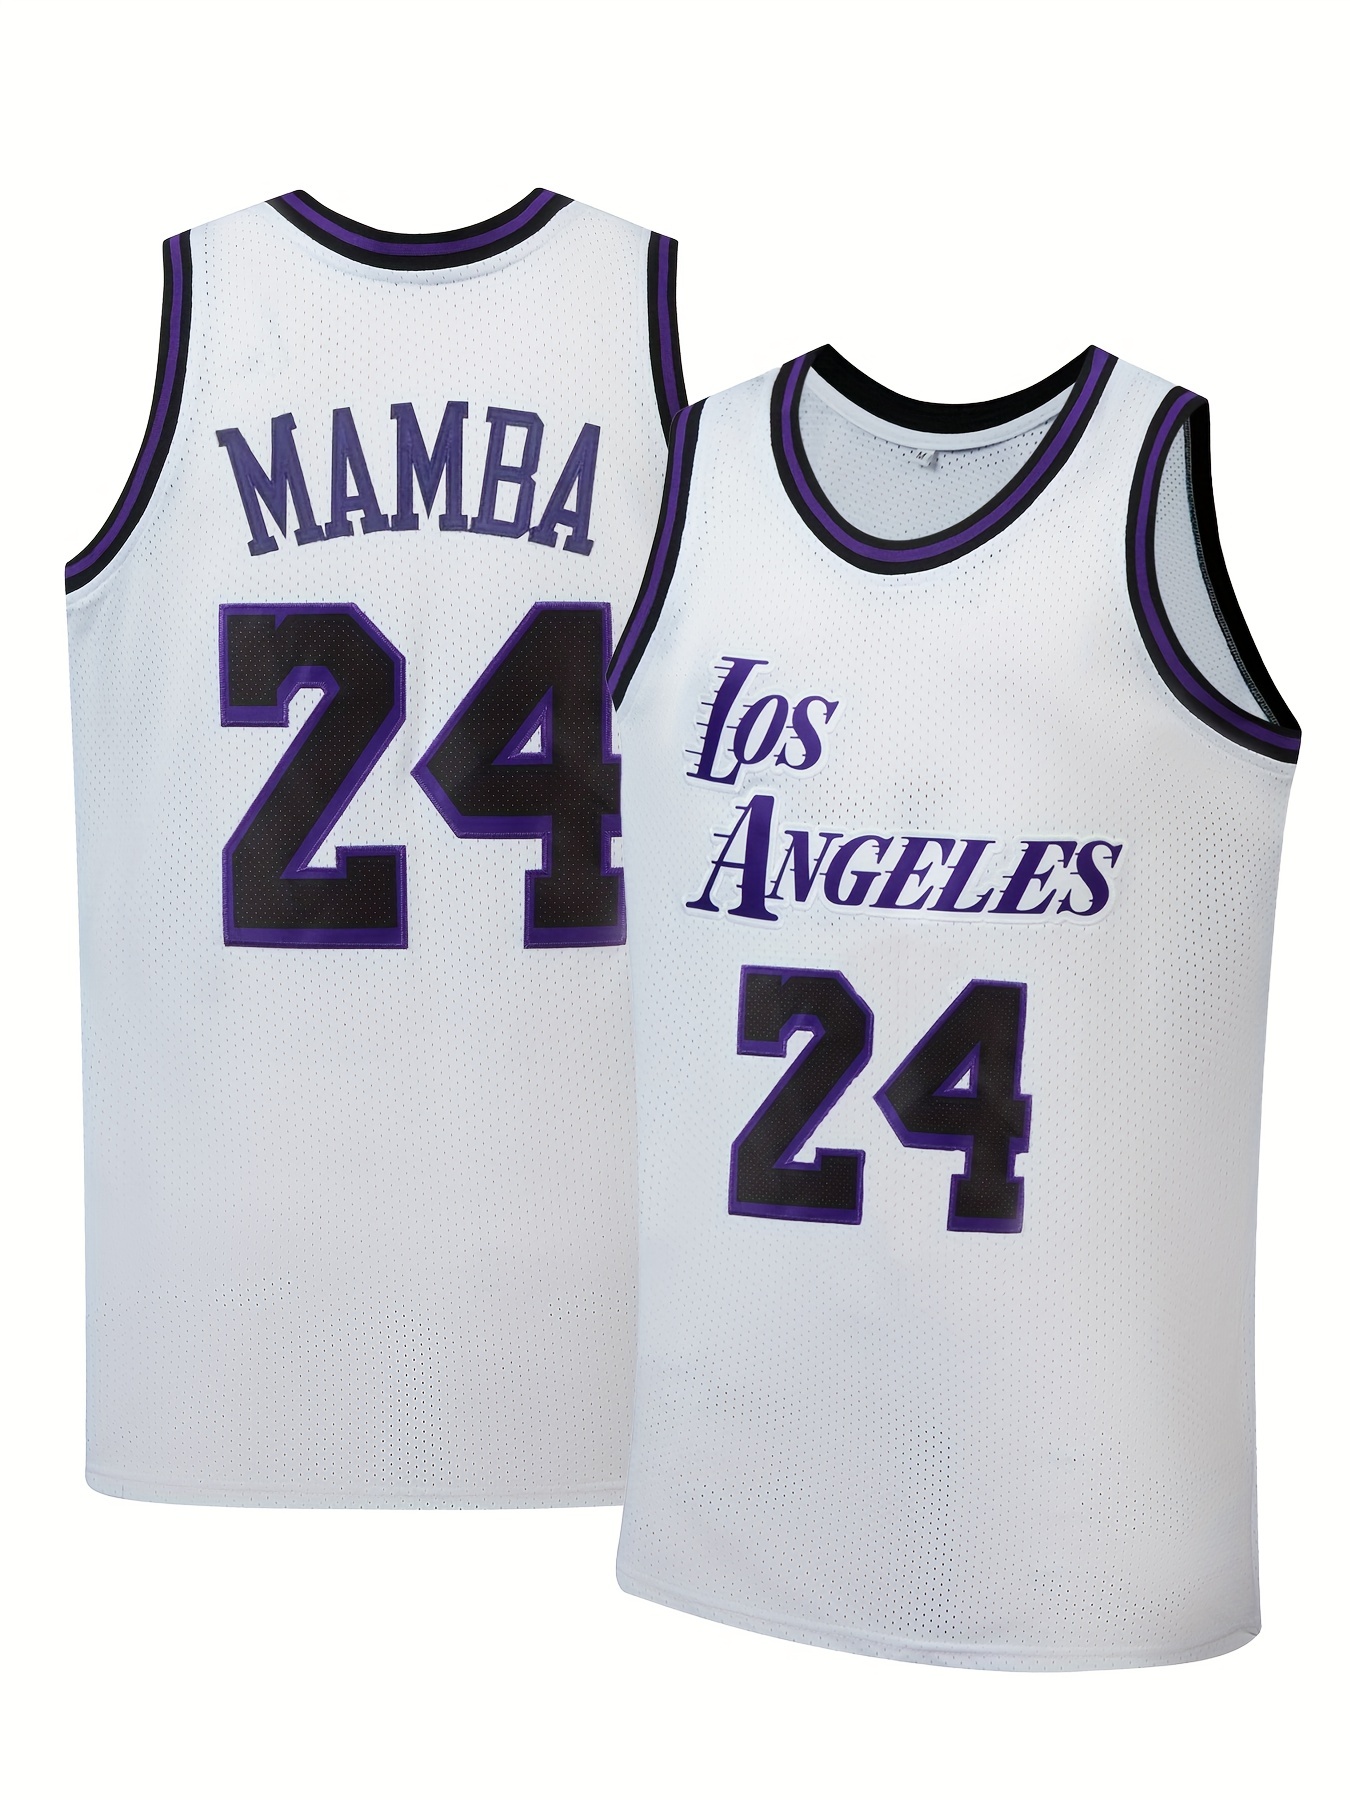 Lakers Jersey for Men #8 Kobe, White Basketball Vest, Sleeveless Top-Large  : : Sports, Fitness & Outdoors